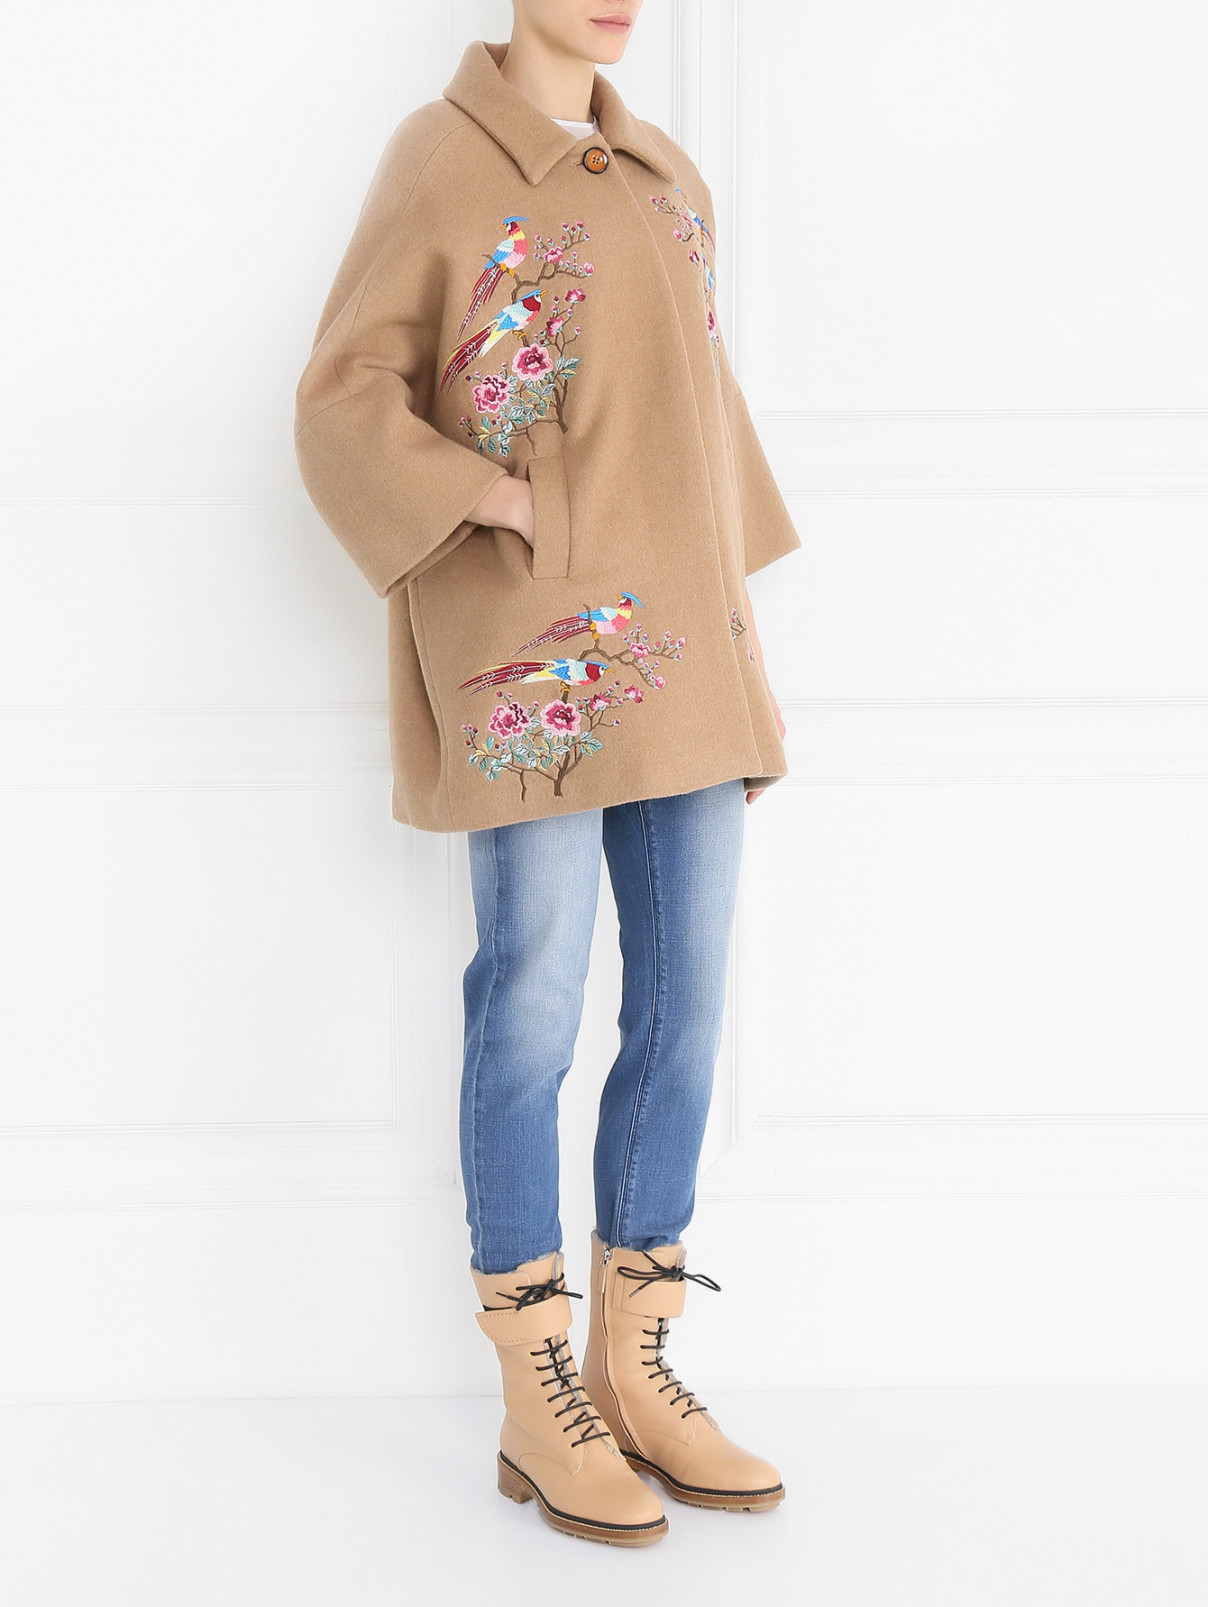 Ботинки из кожи на меху со шнуровкой Jil Sander  –  Модель Общий вид  – Цвет:  Бежевый